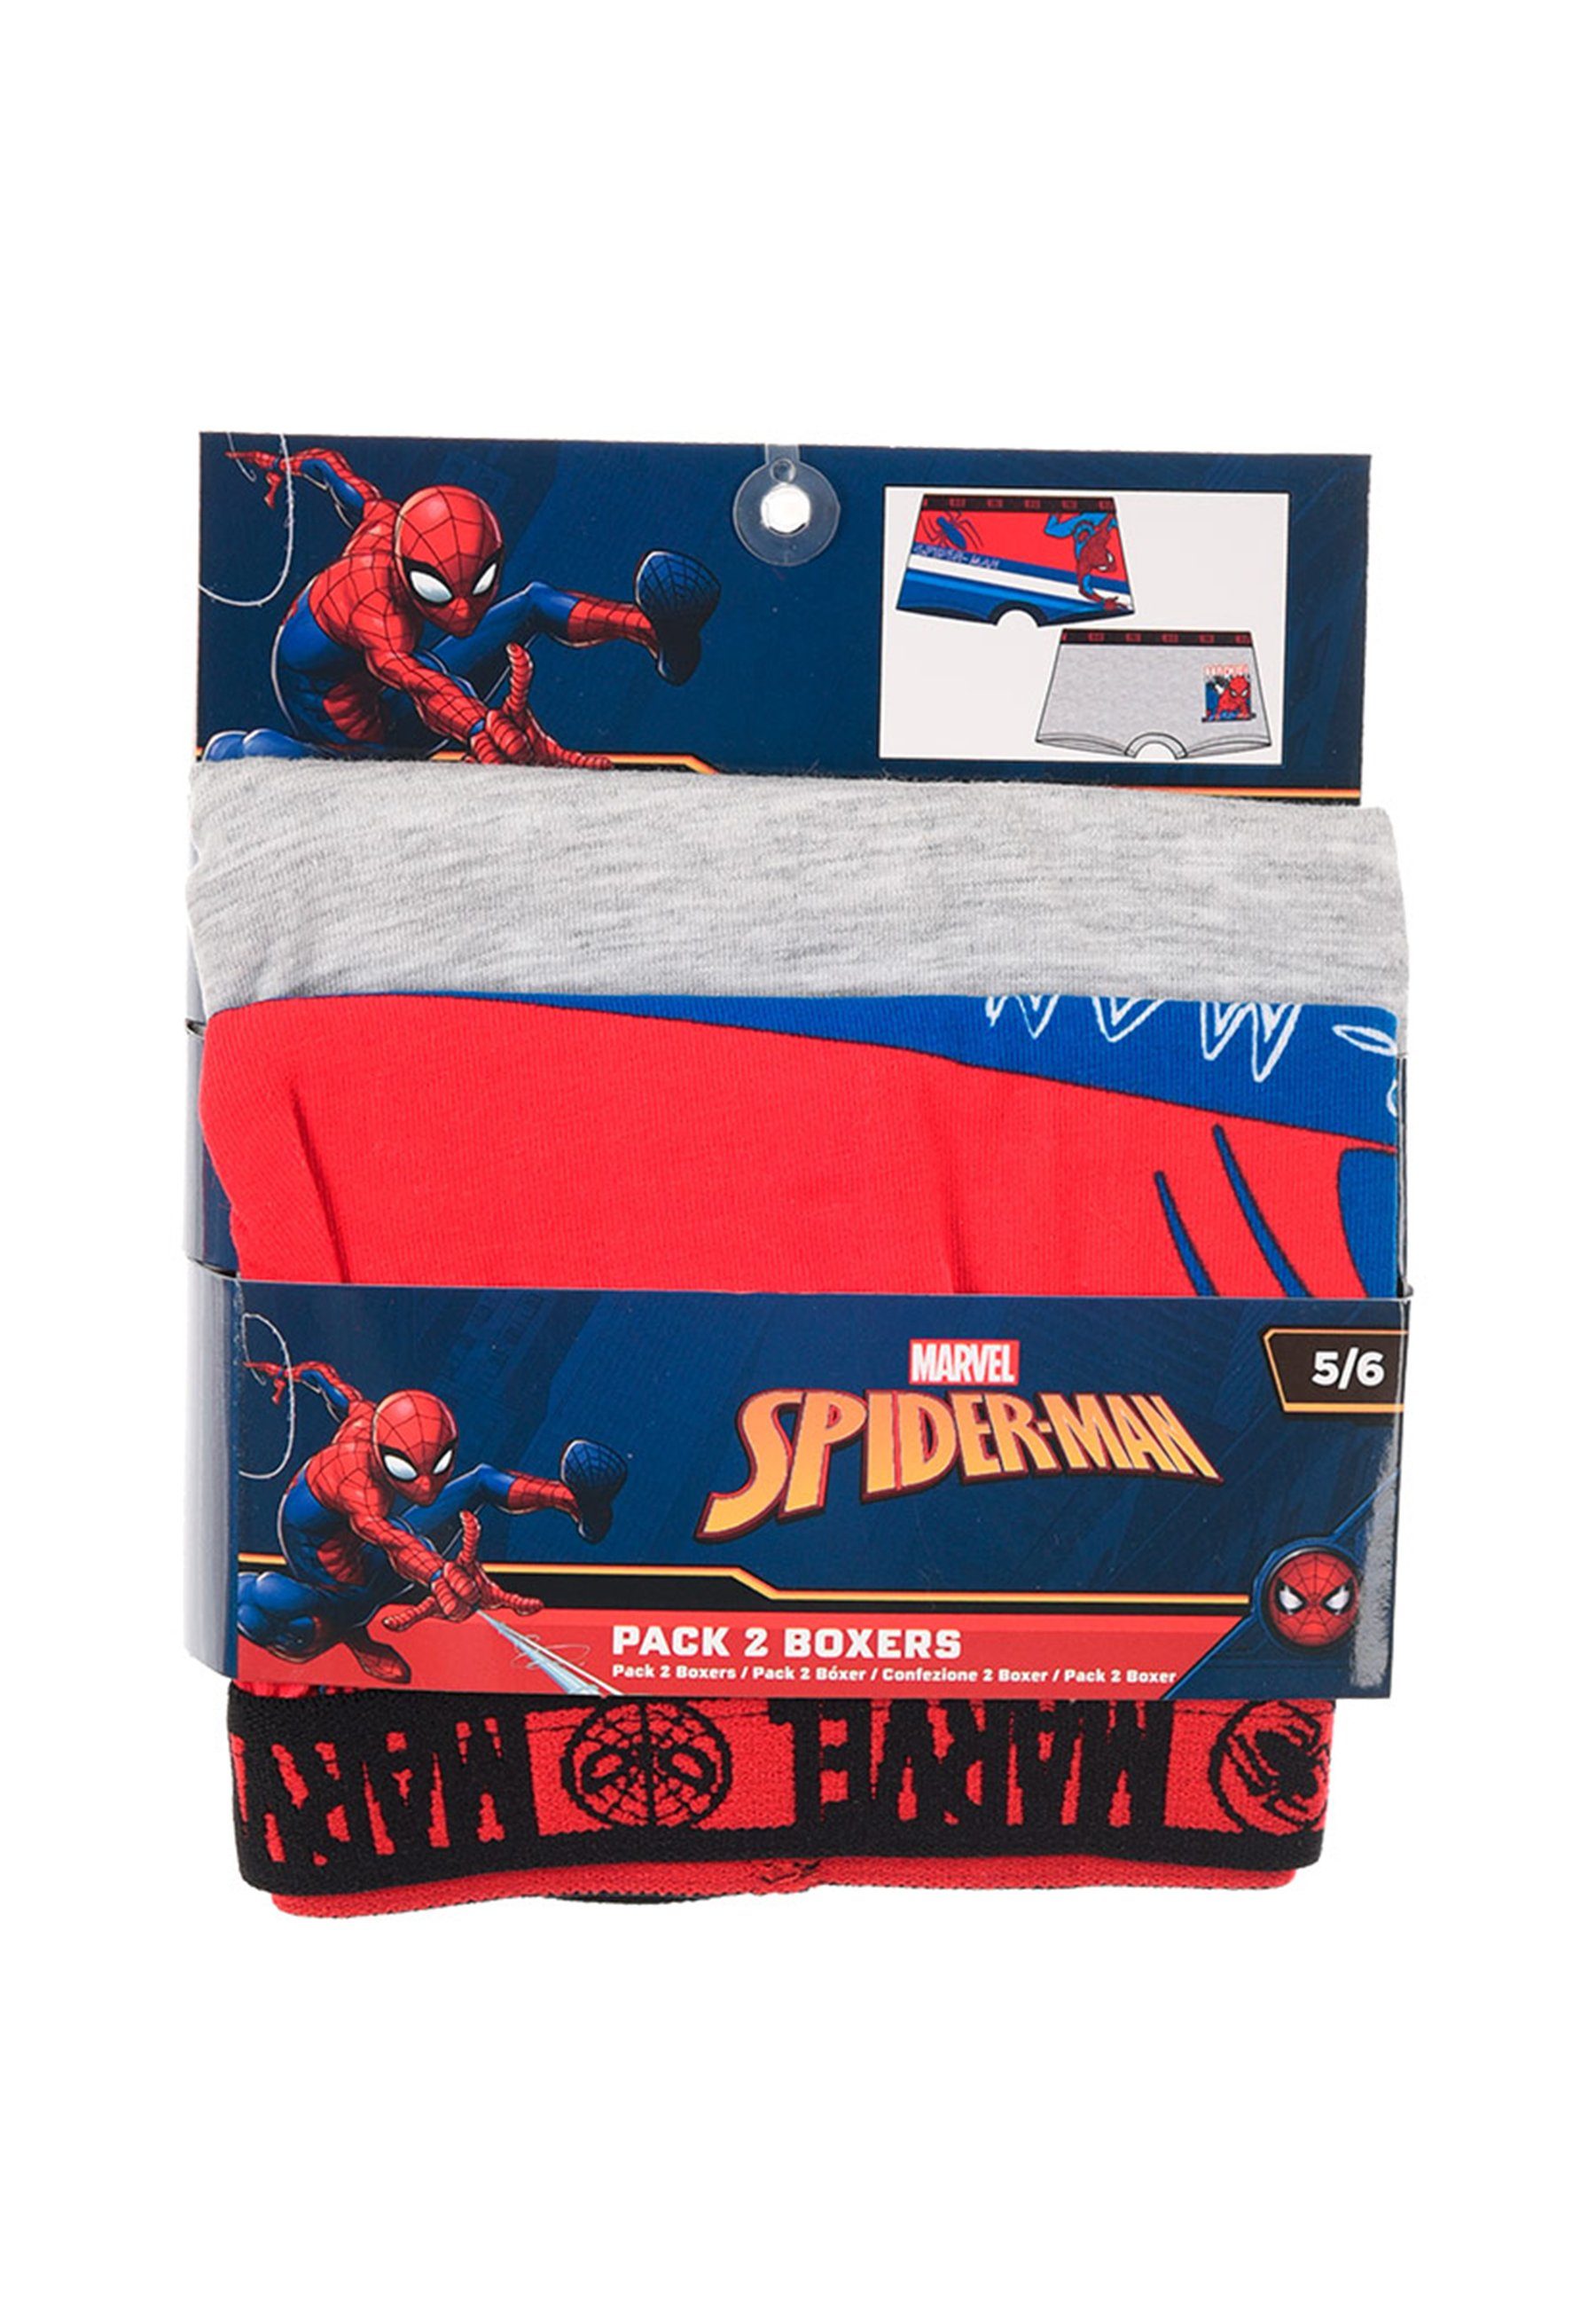 Spiderman Boxershorts Kinder Jungen Unterhosen Pants